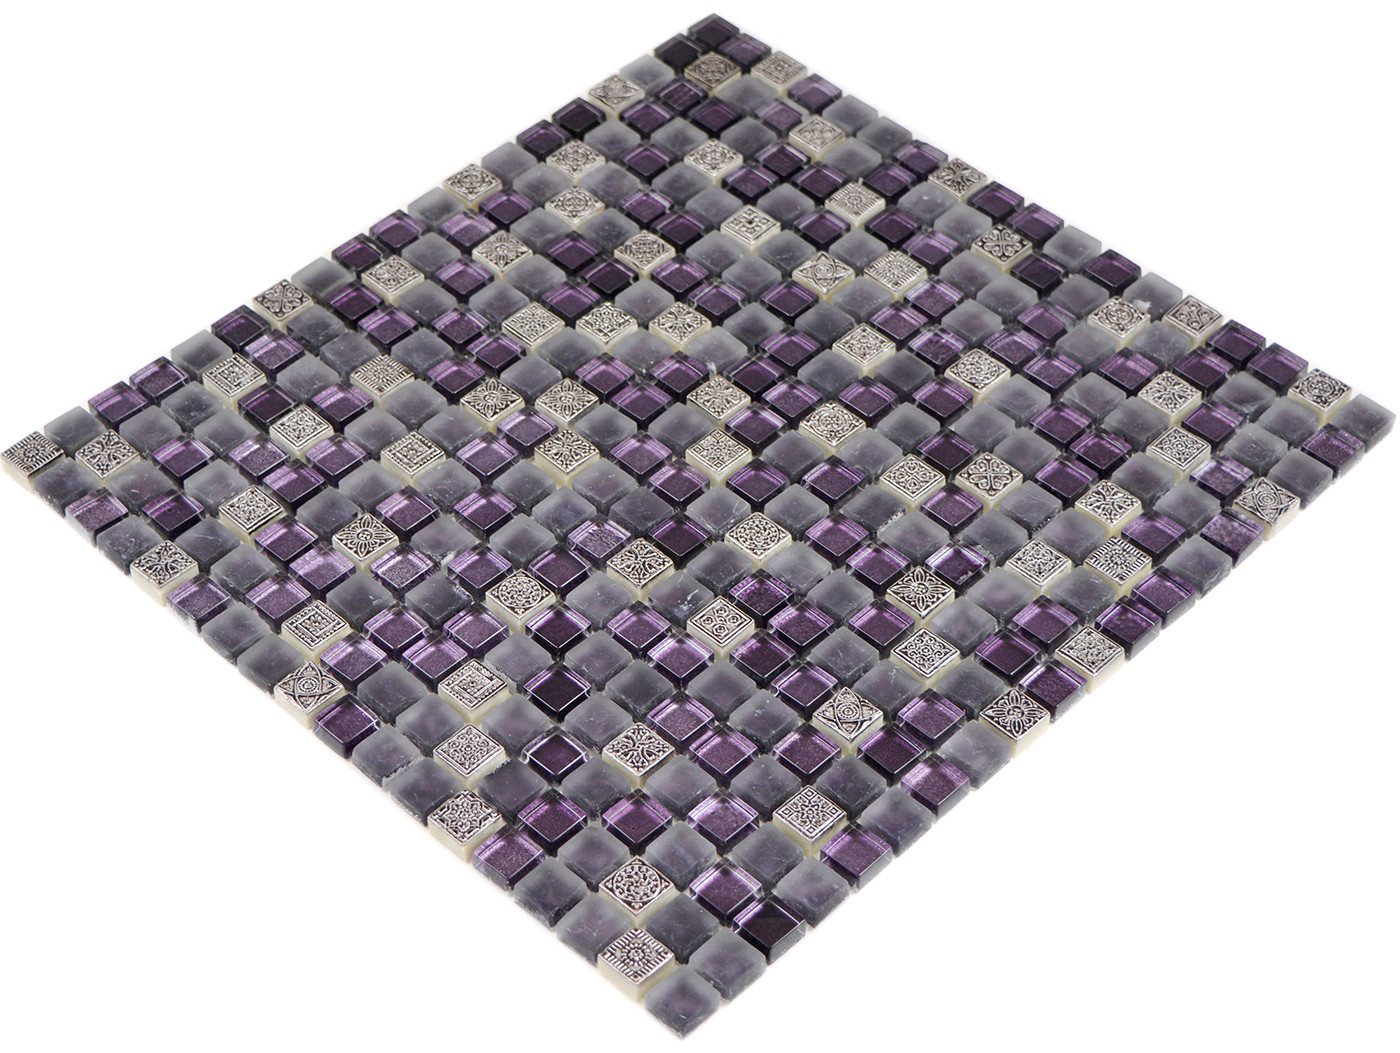 Mosani Mosaikfliesen Glasmosaik Resin Mosaik lila glänzend / 10 Matten von Mosani